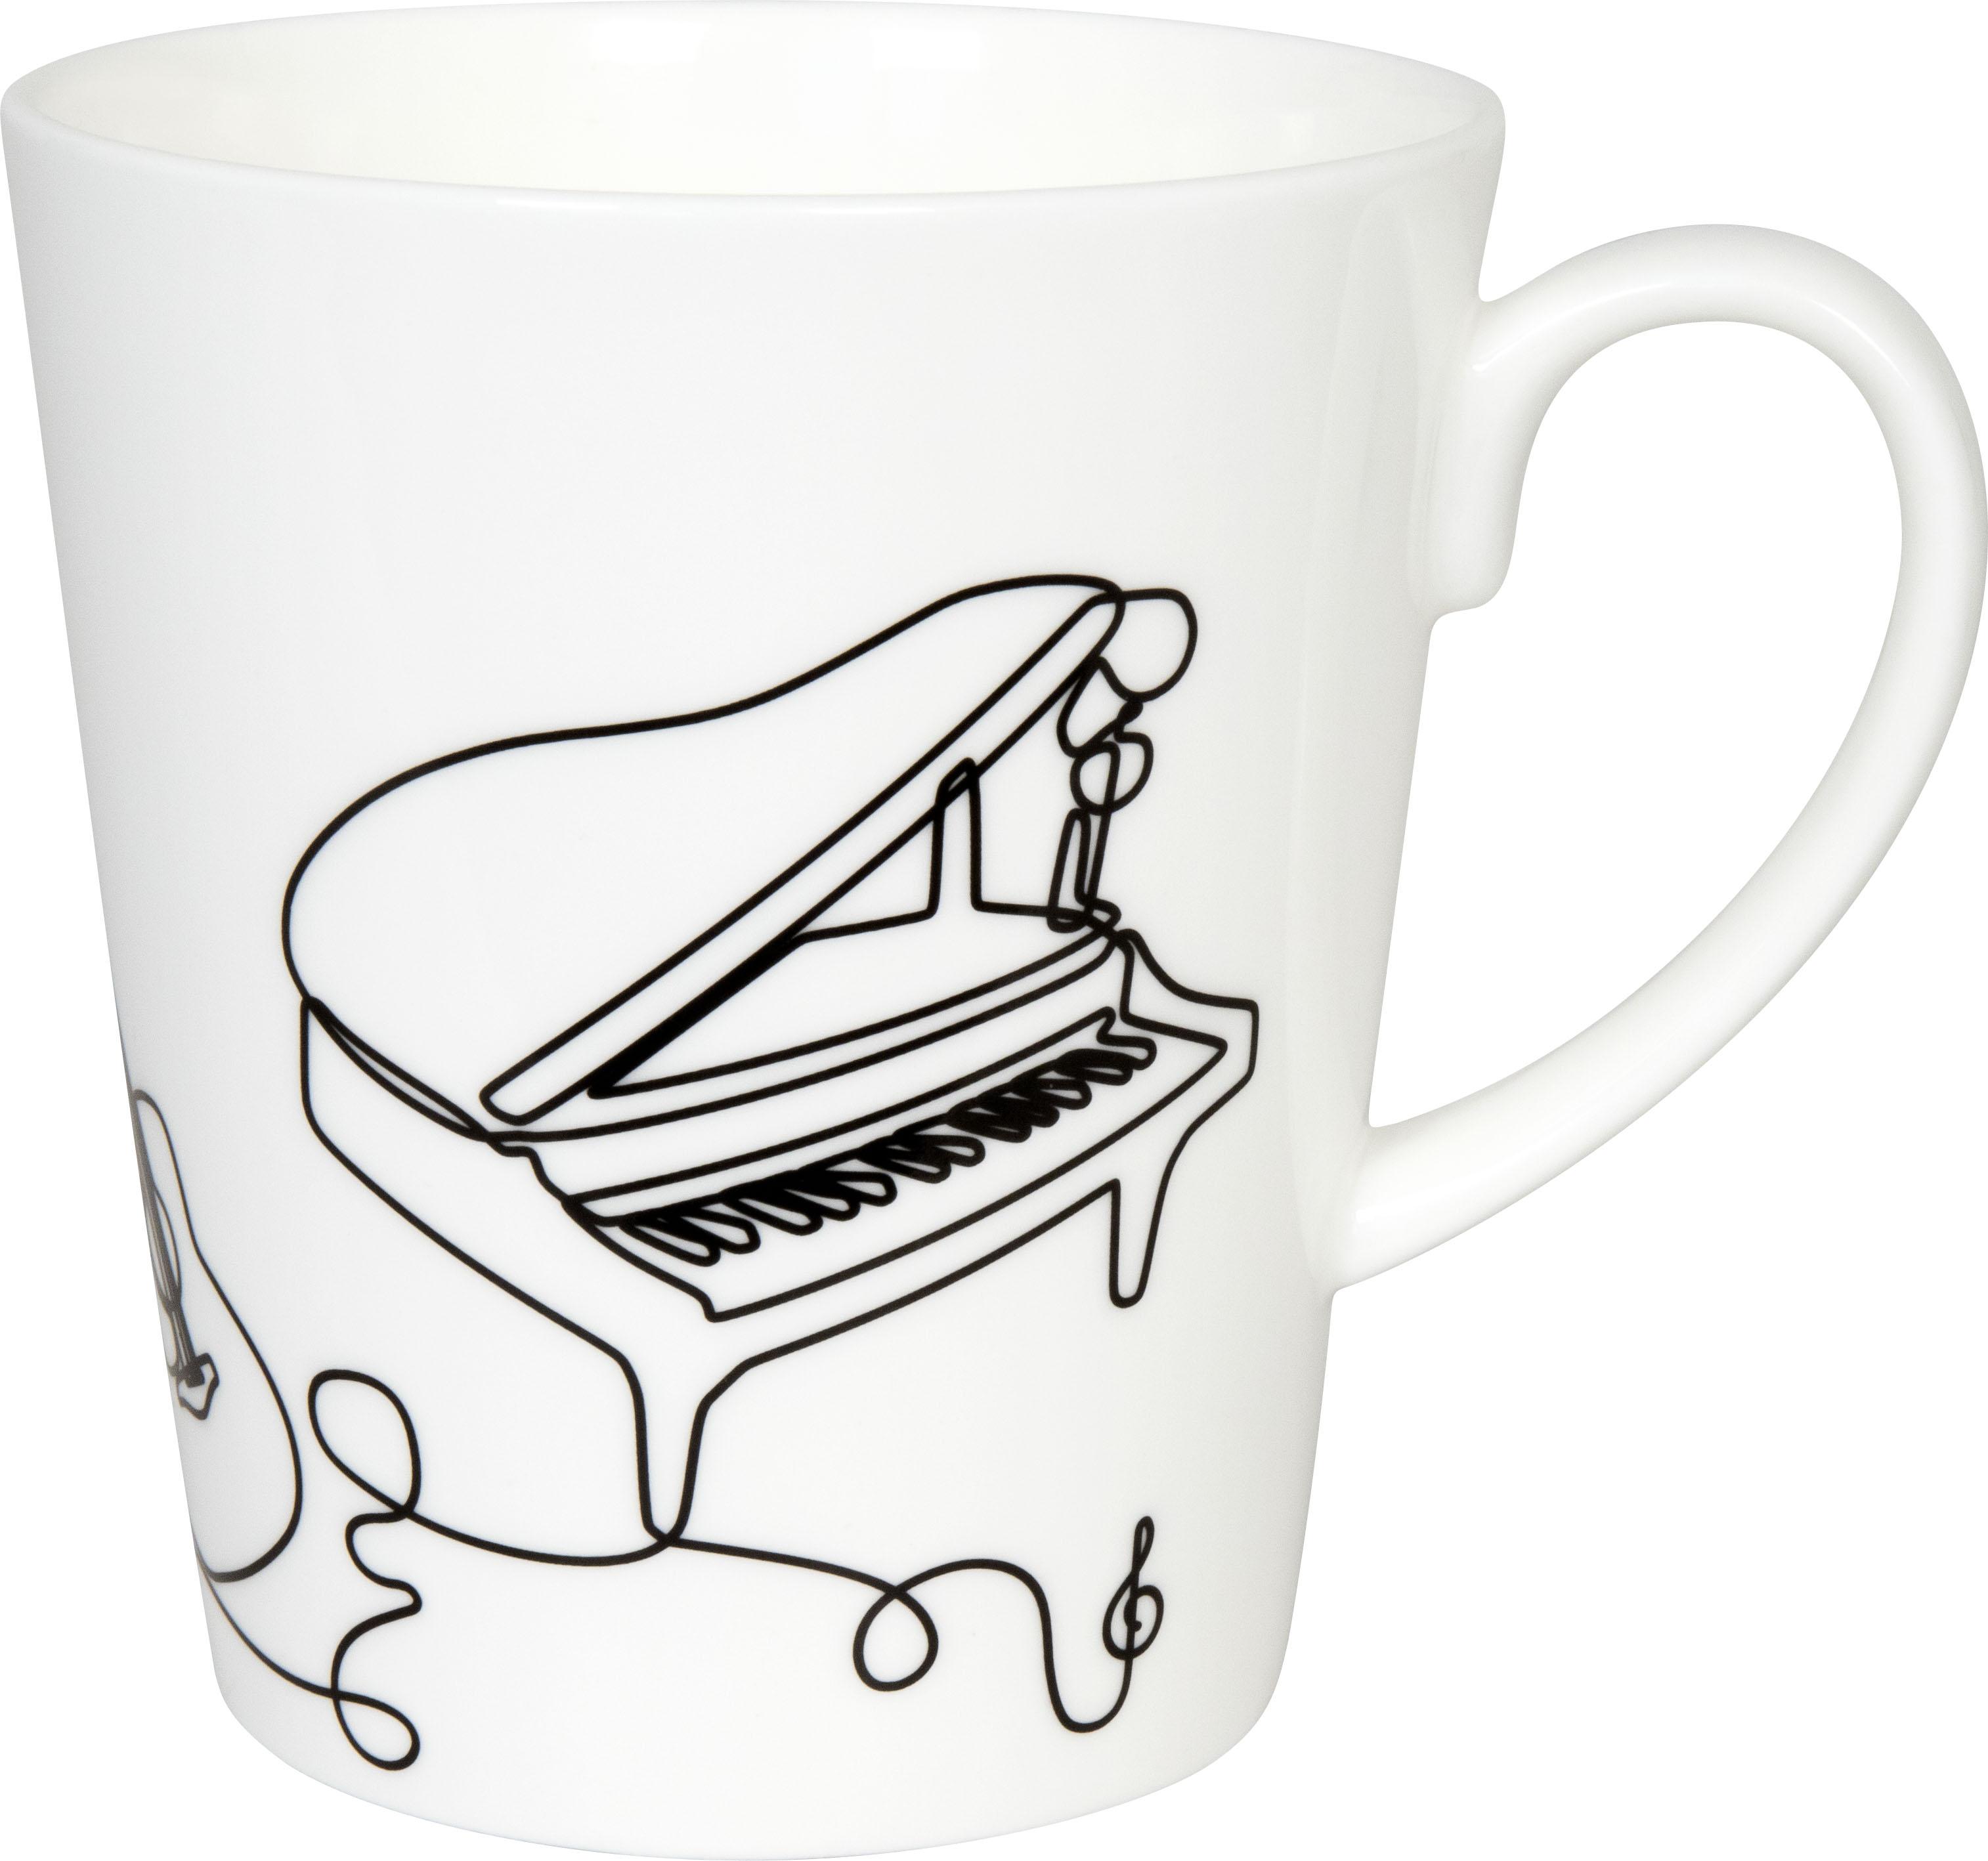 Wunderbar-mug instruments